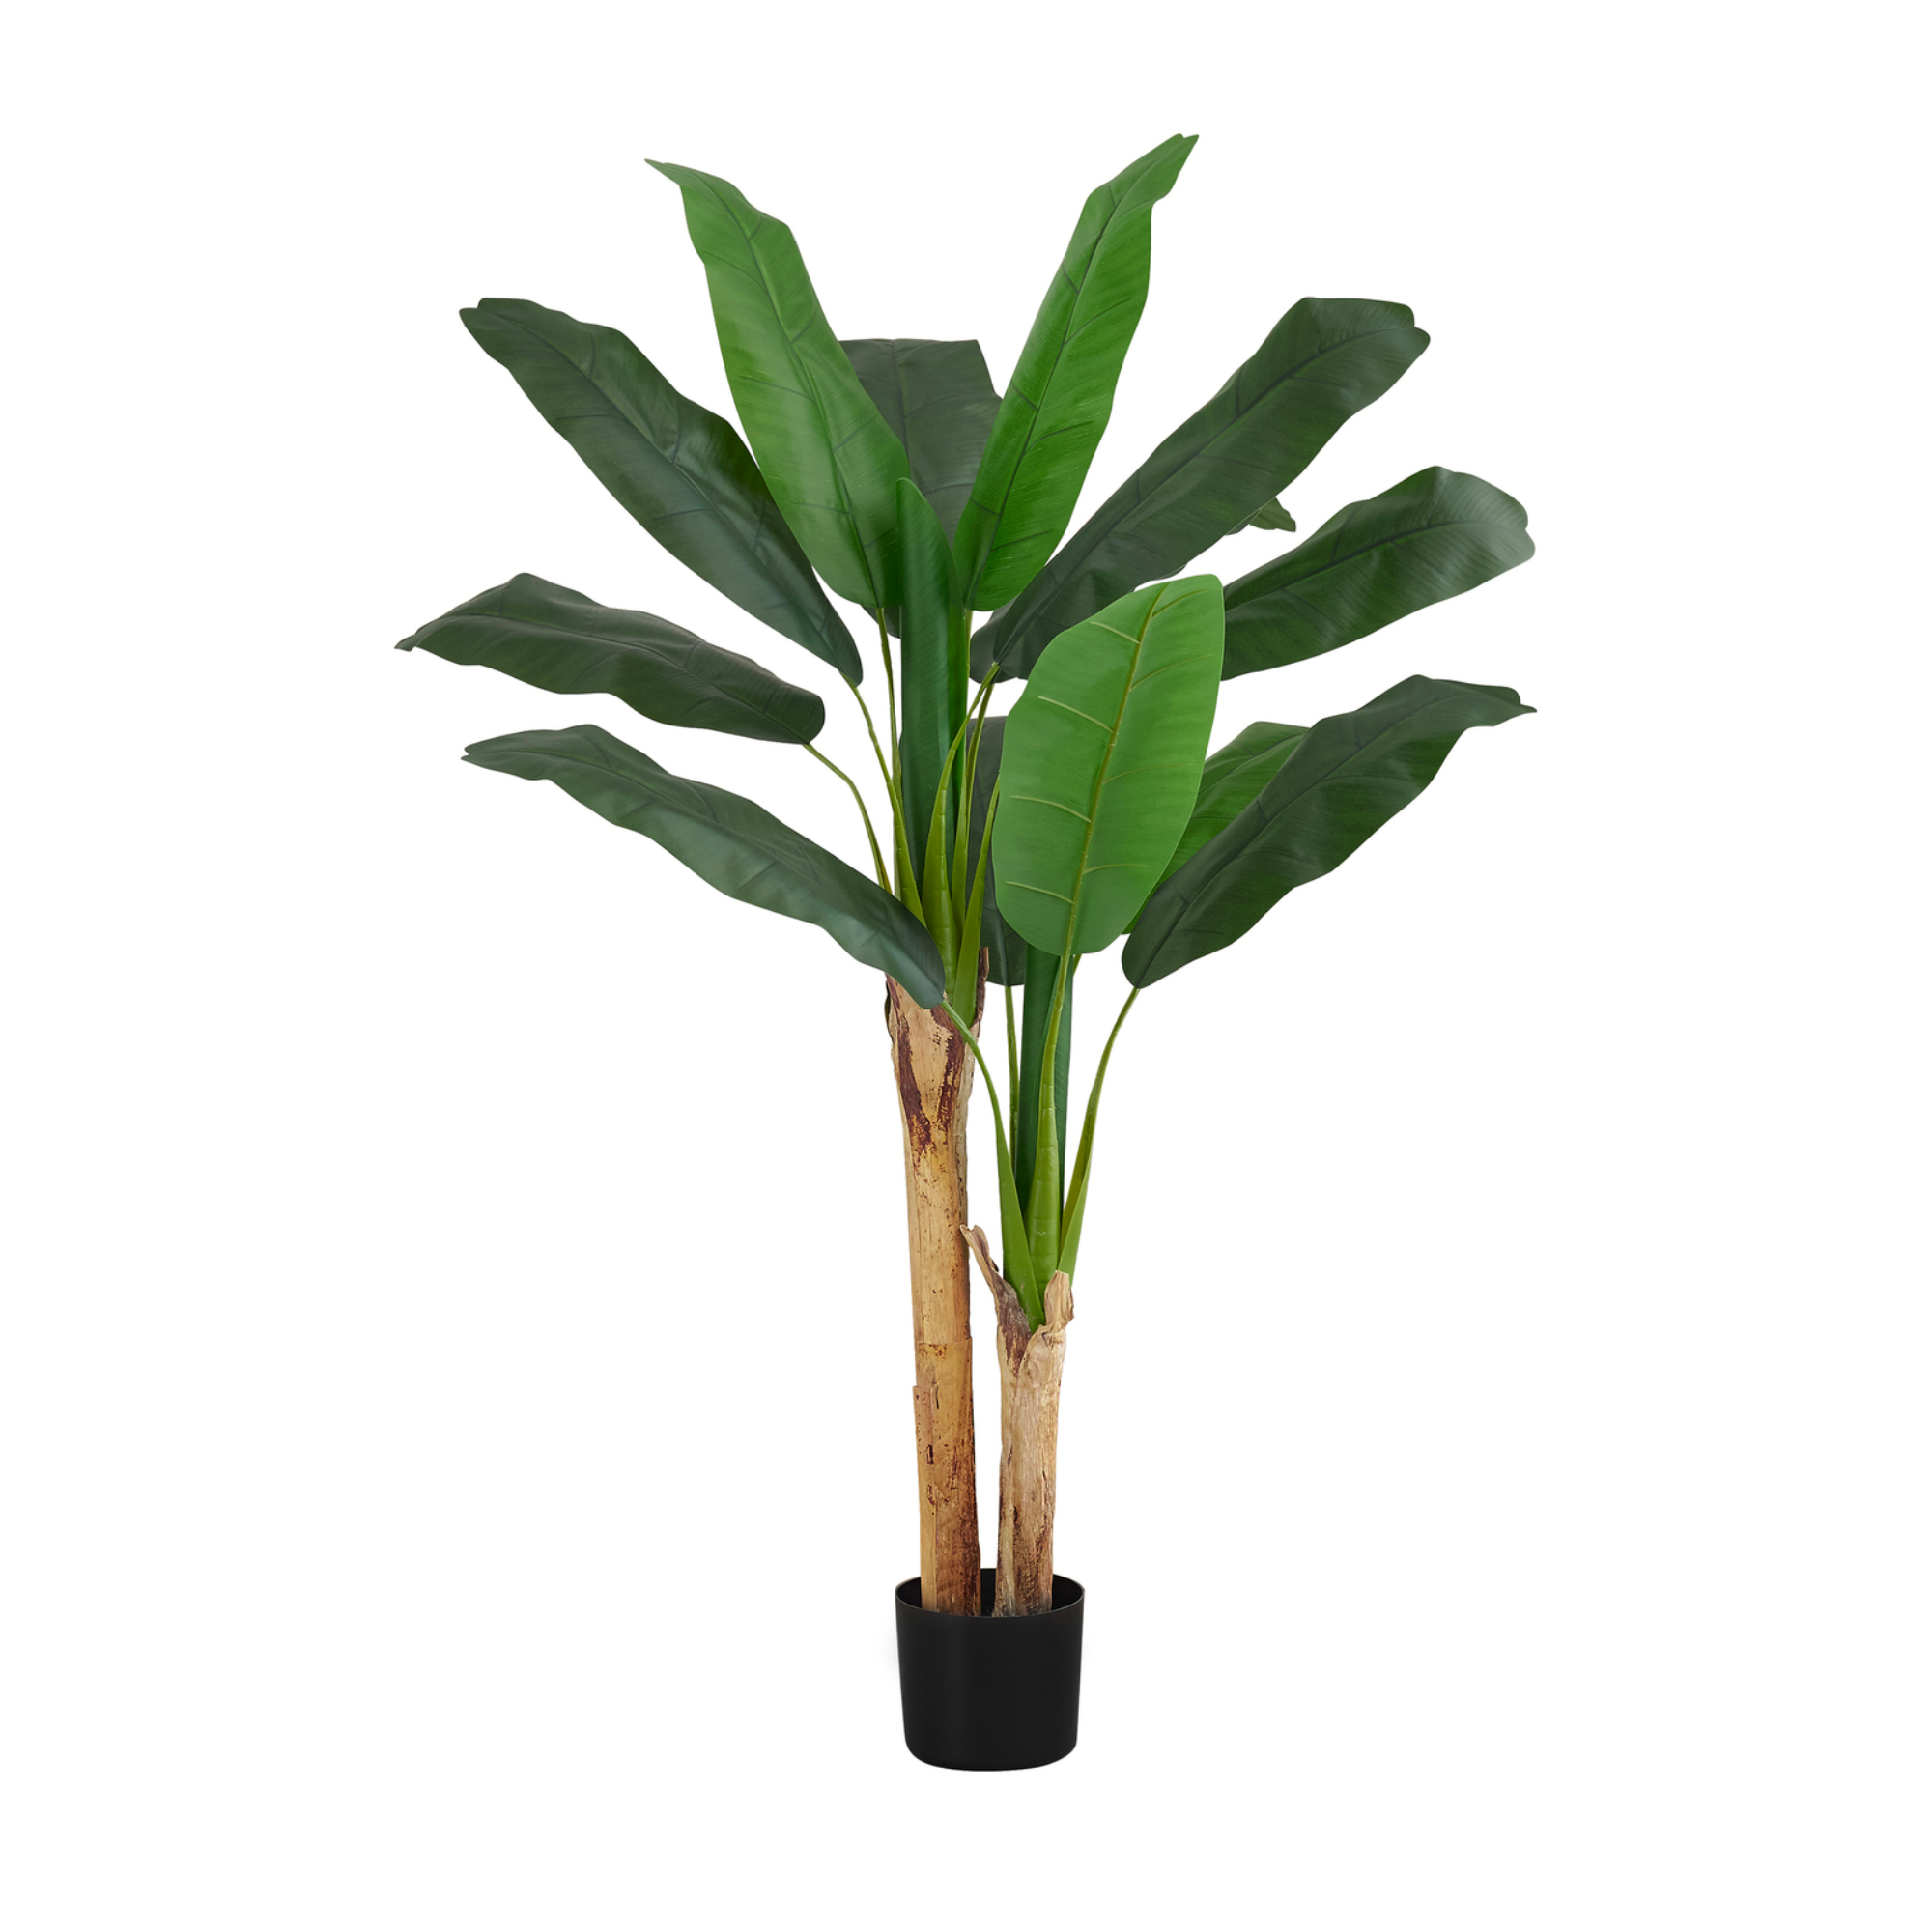 ARTIFICIAL PLANT - 55"H / INDOOR BANANA TREE IN A 6" POT